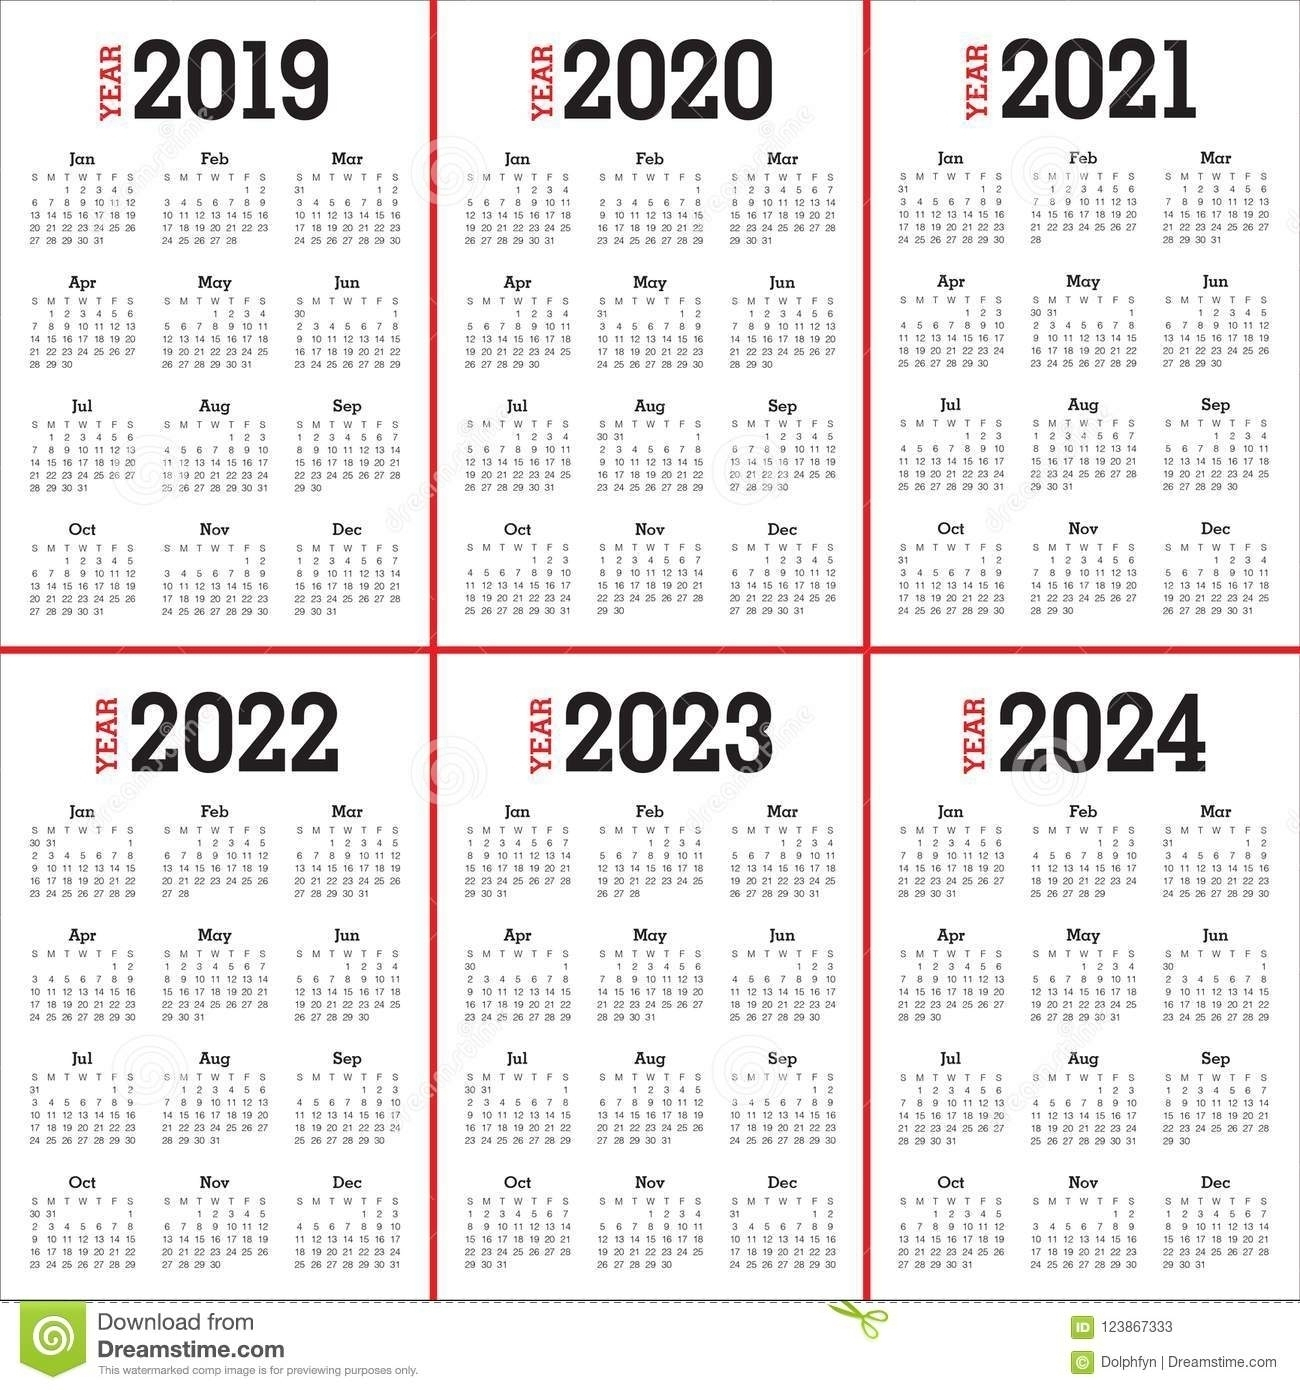 Printable 3 Year Calendars 2021 2022 2023 | Ten Free